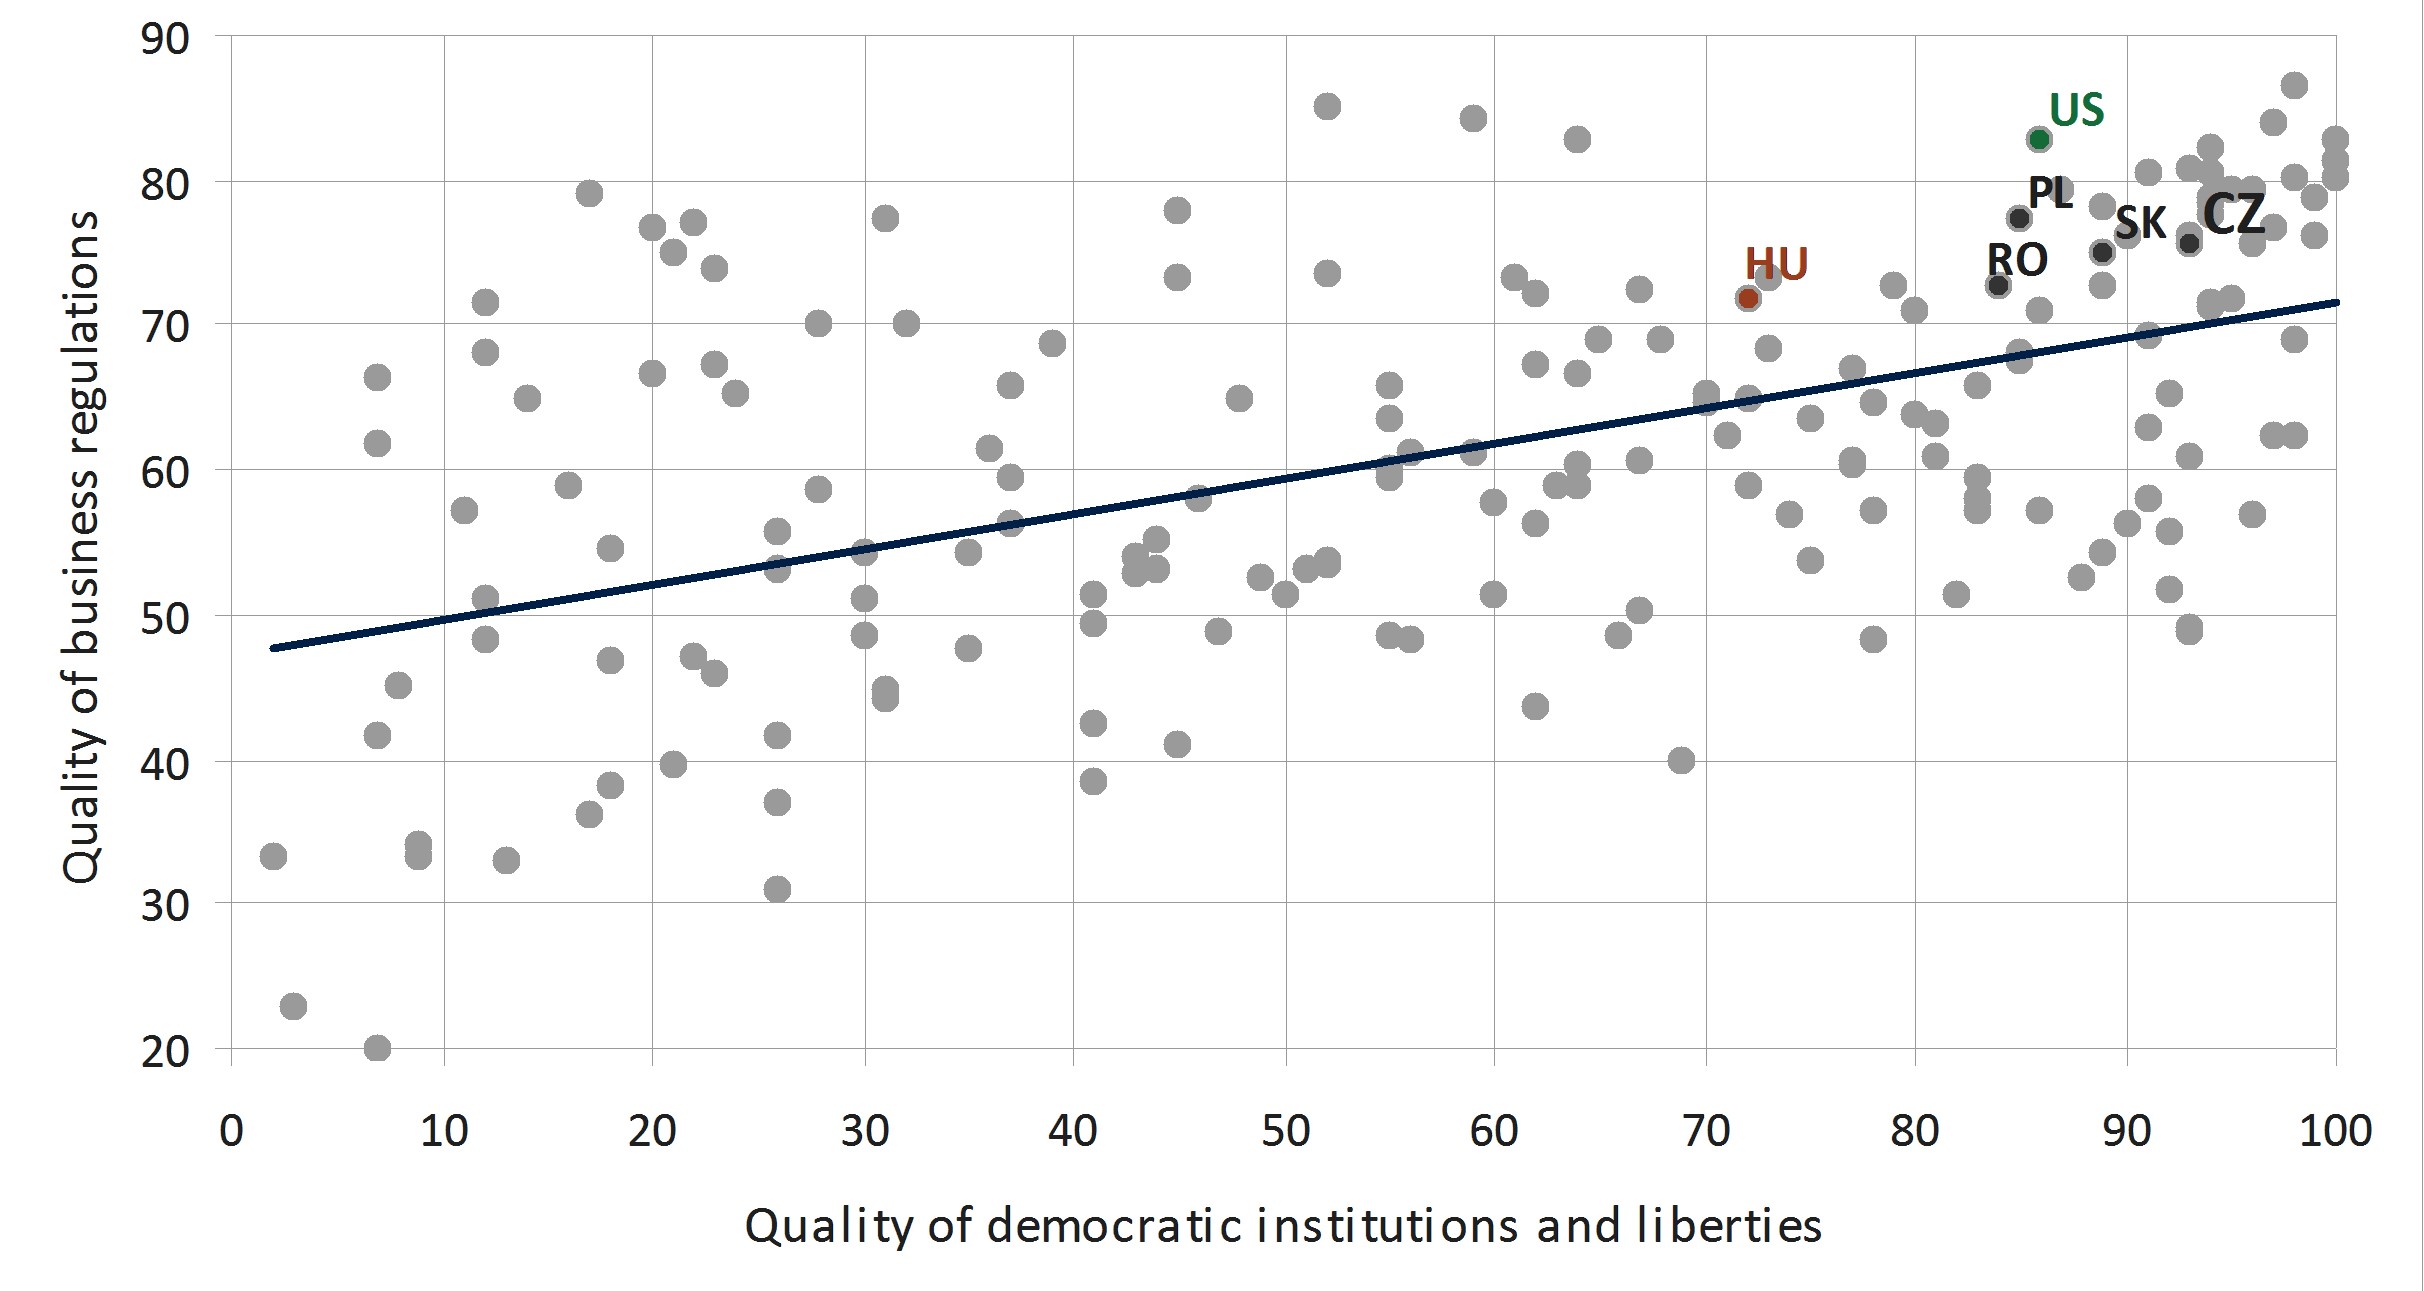 Do civil liberties contribute to economic growth? 